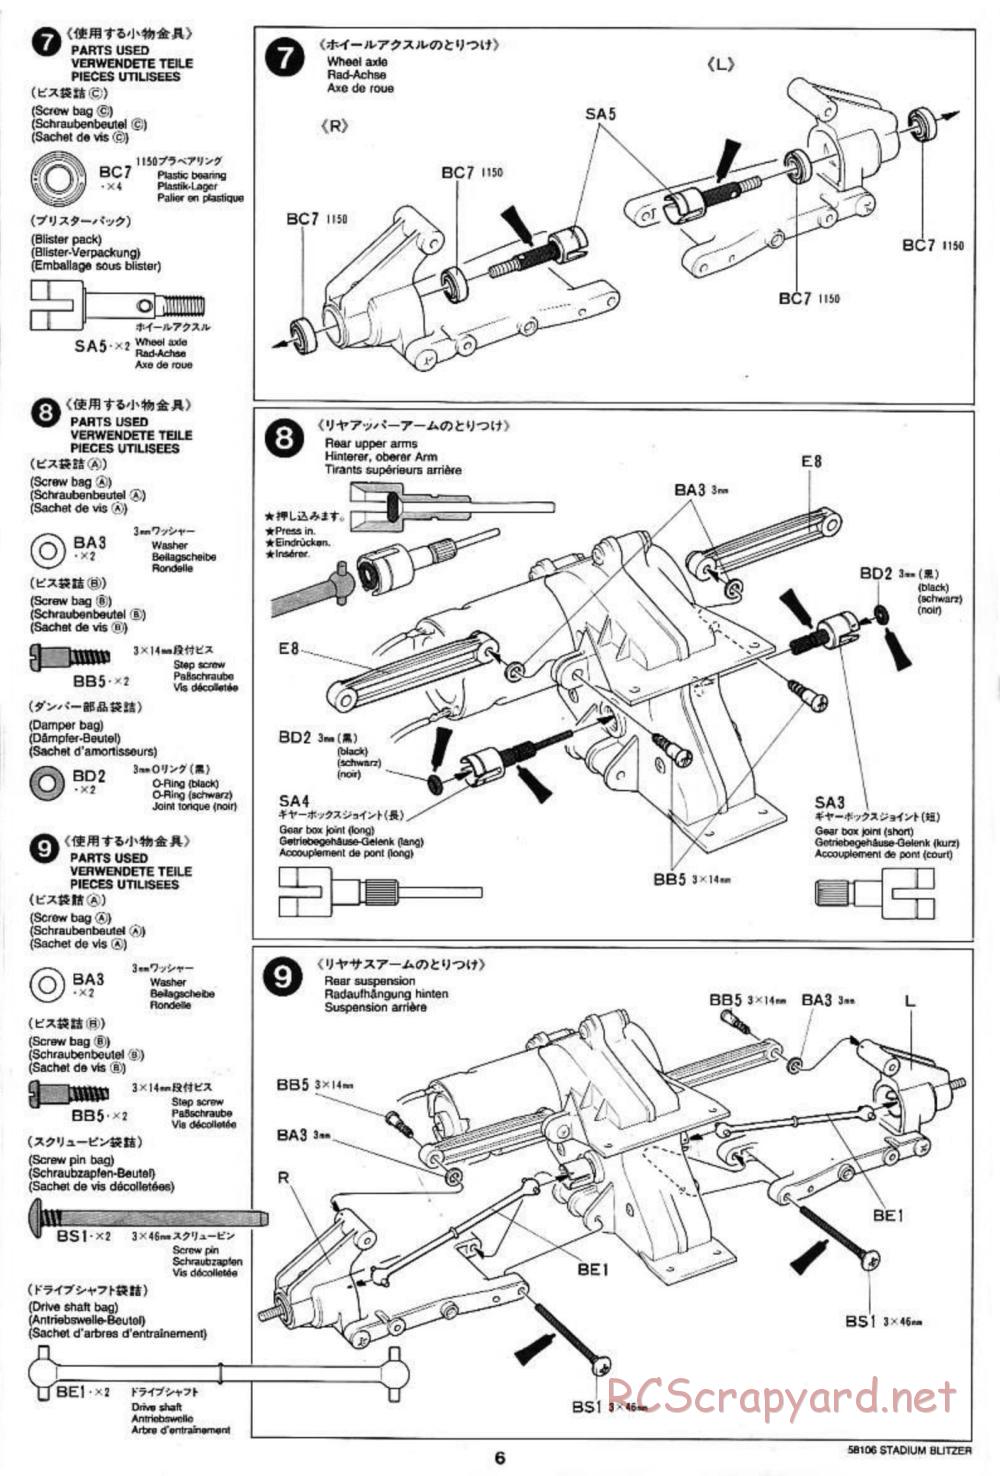 Tamiya - Stadium Blitzer Chassis - Manual - Page 6